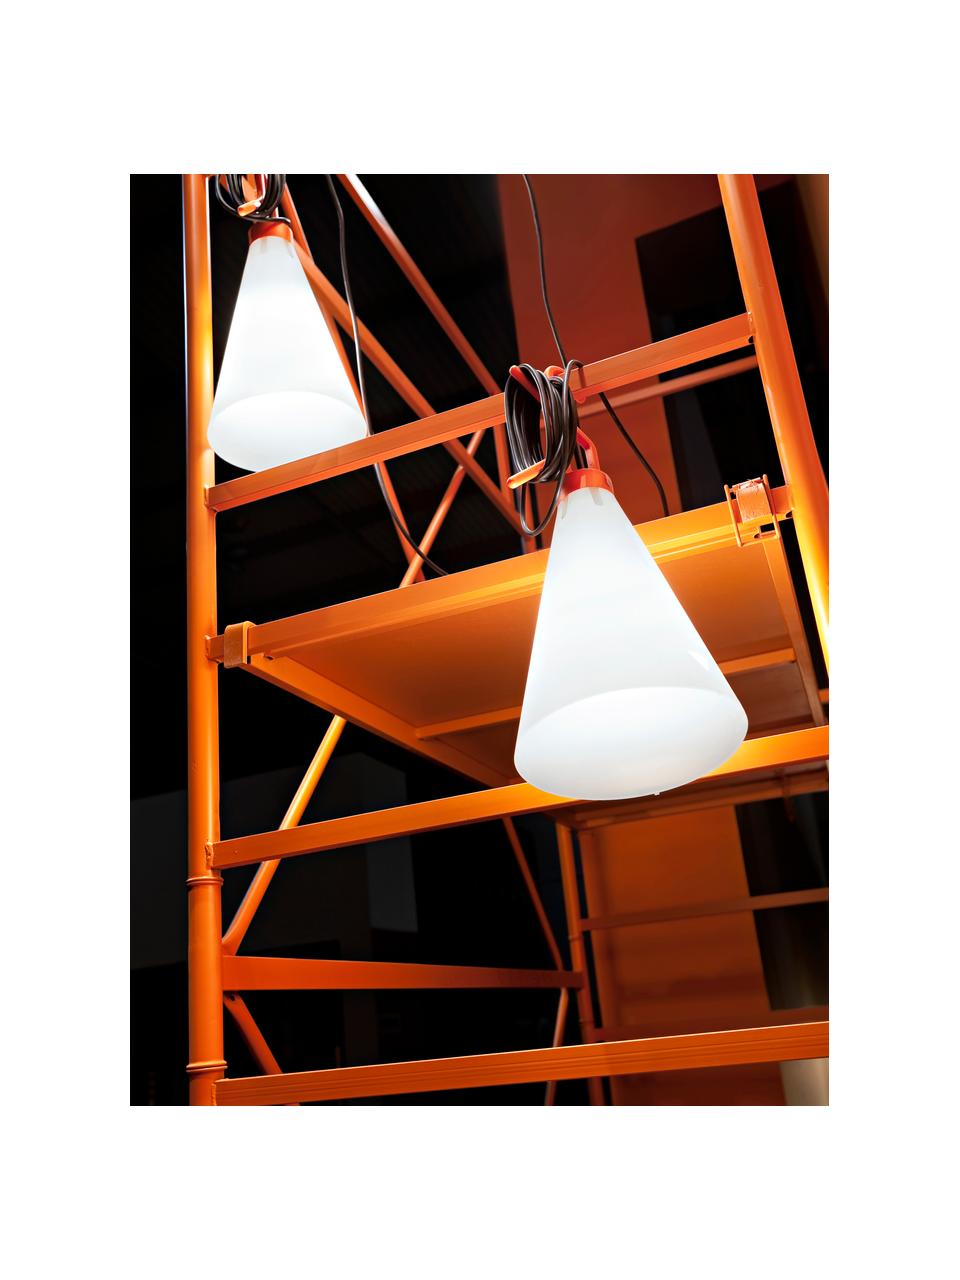 Tafellamp Mayday, Kunststof, Oranje, wit, Ø 23 x H 55 cm